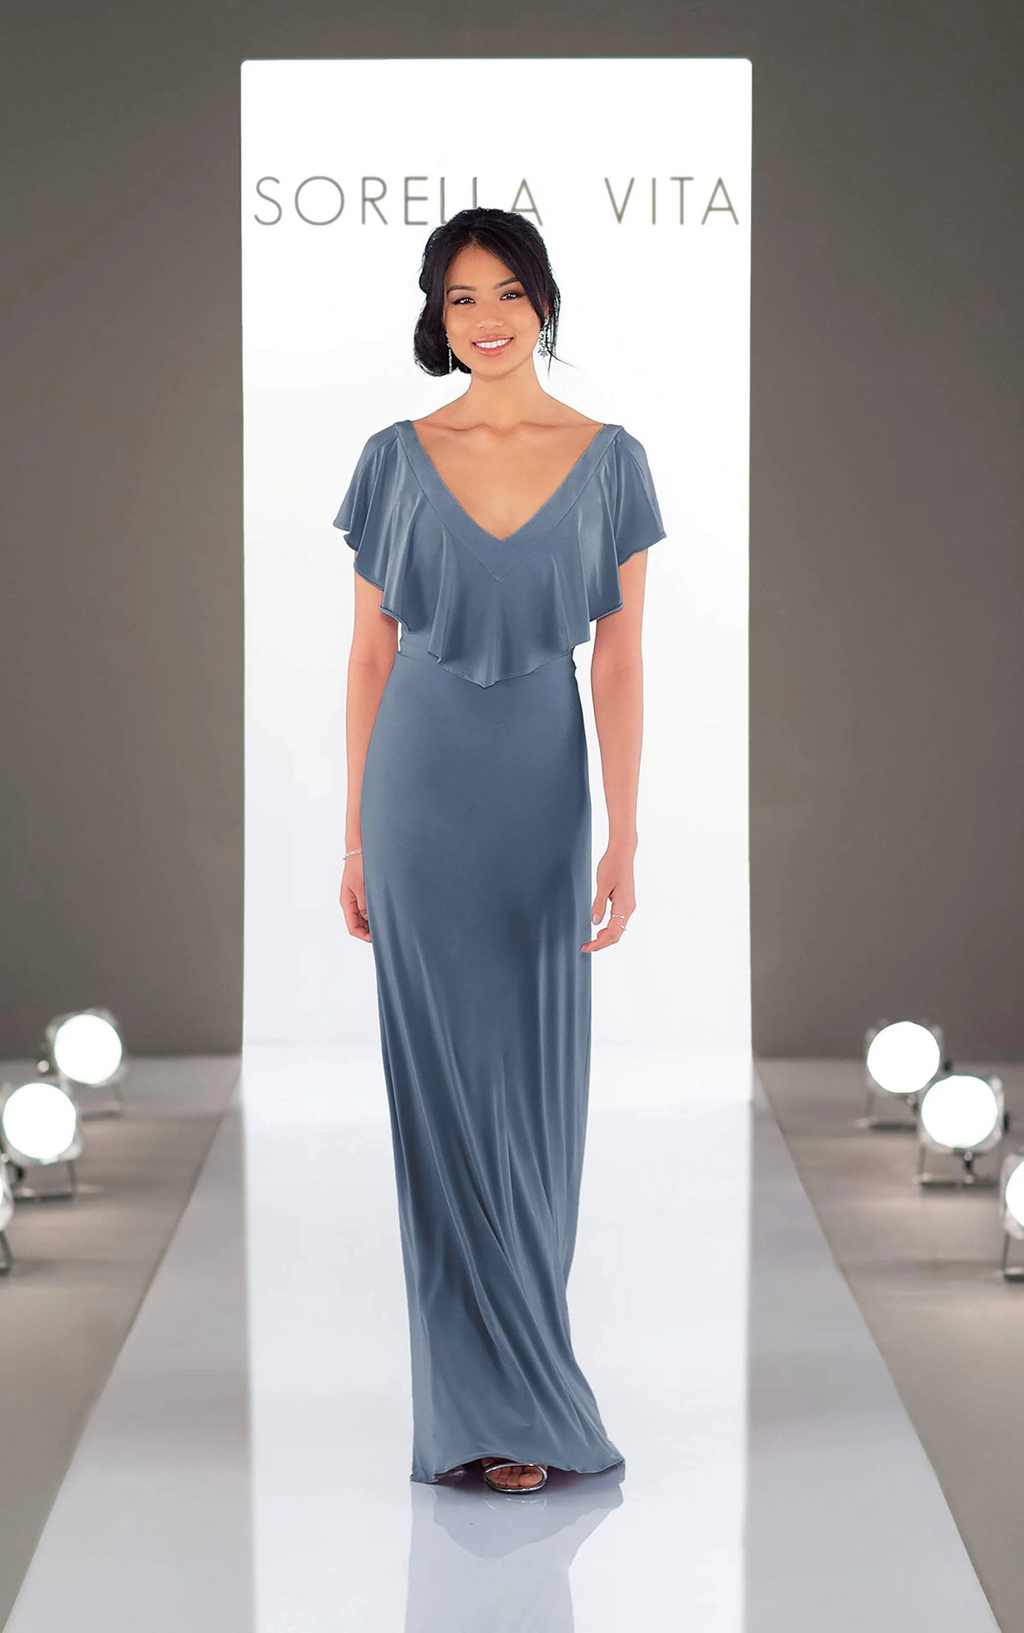 Sorella Vita Dress Style 9110 (Slate-Size 12) Prom, Ball., Black-tie, Bridesmaid, Pageant